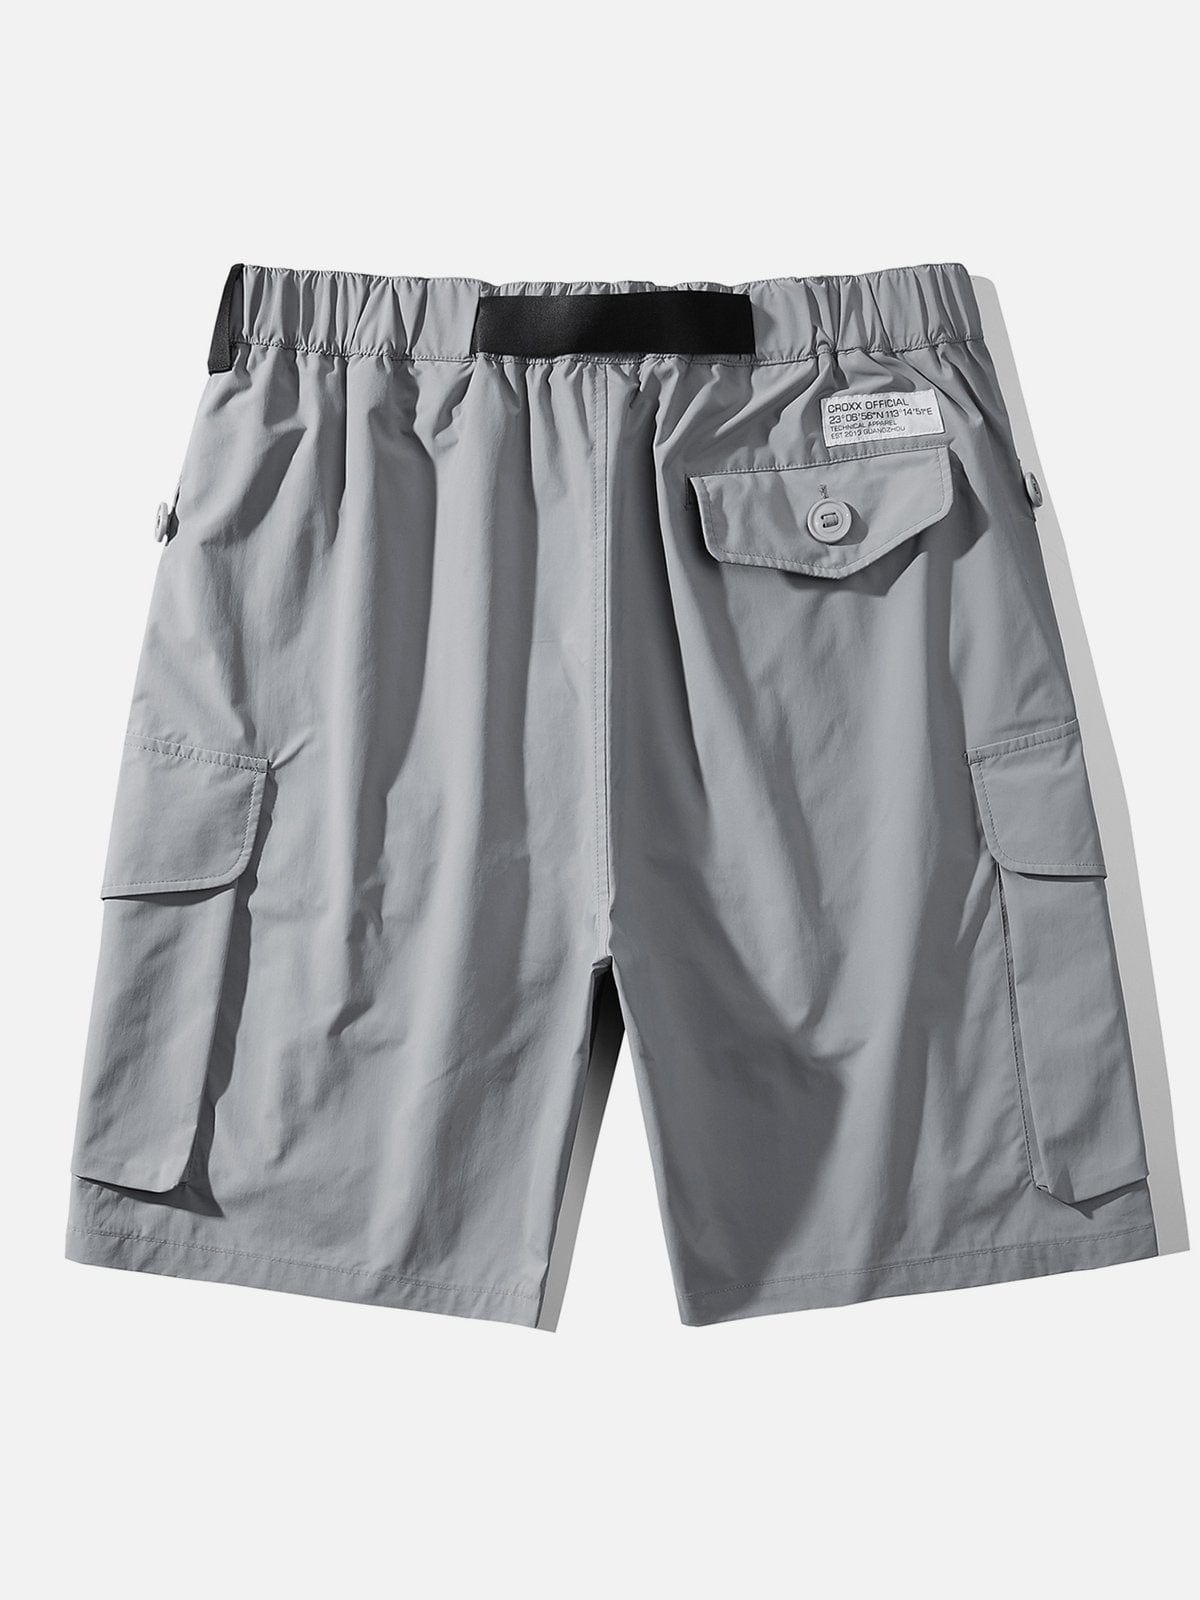 Personalized Belt Multi Pockets Shorts Streetwear Brand Techwear Combat Tactical YUGEN THEORY